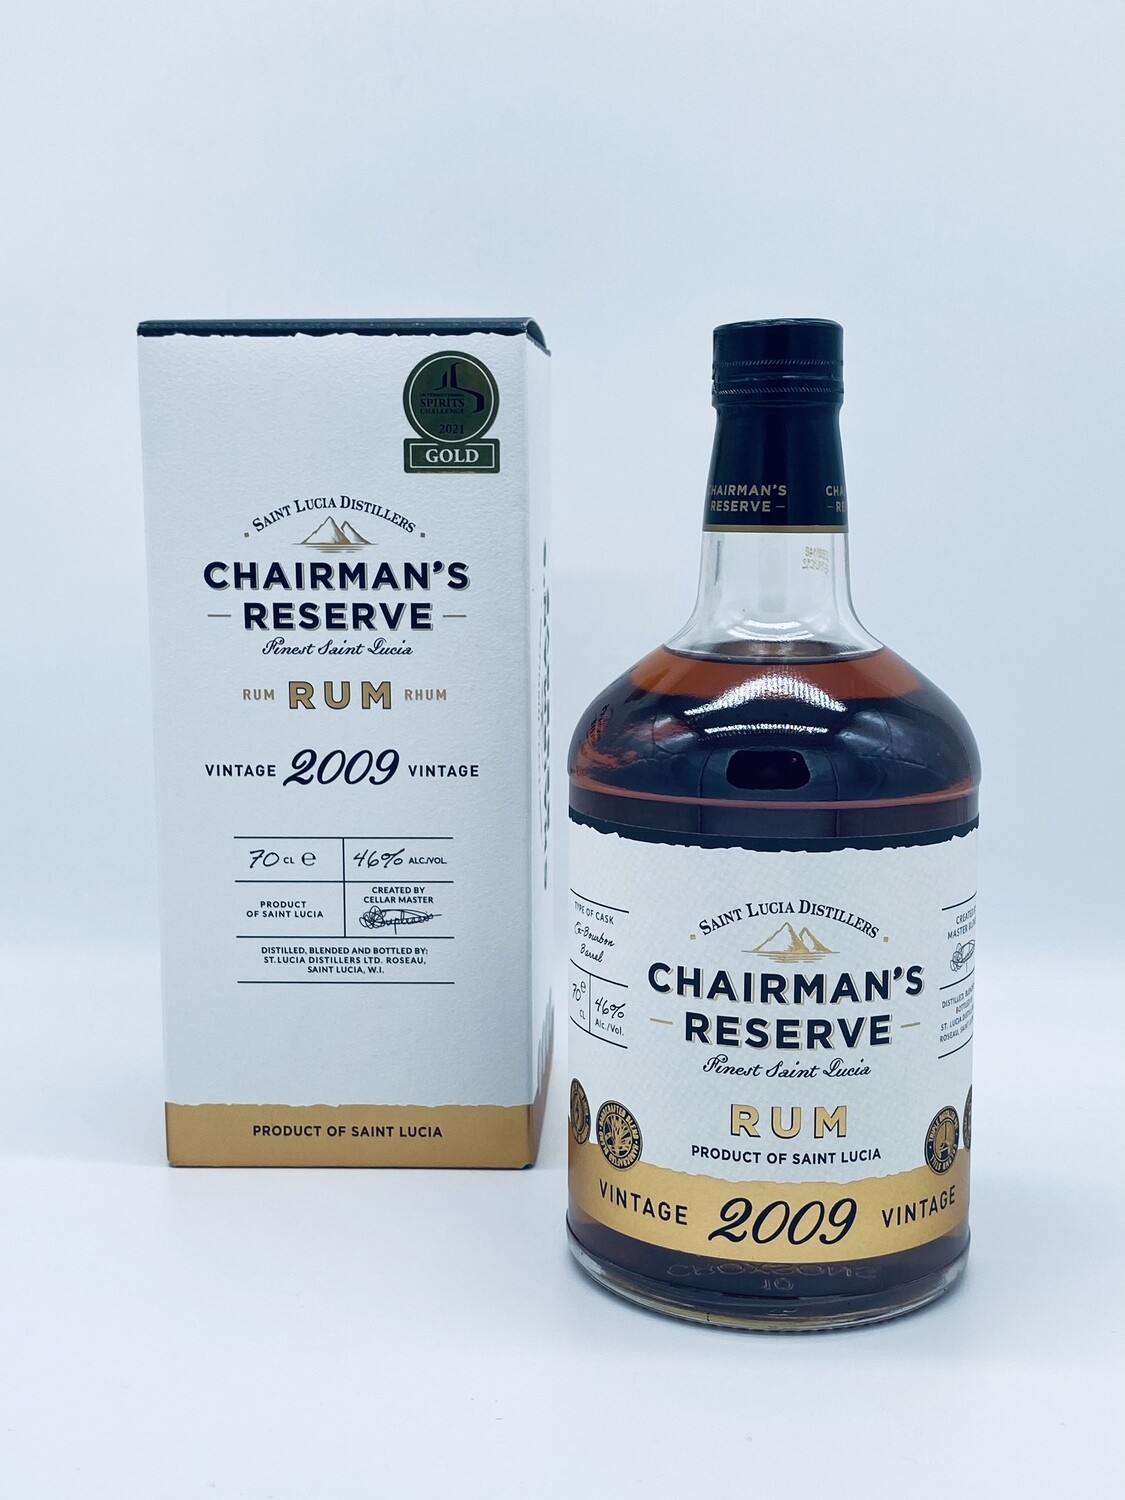 Chairman's Reserve vintage 2009